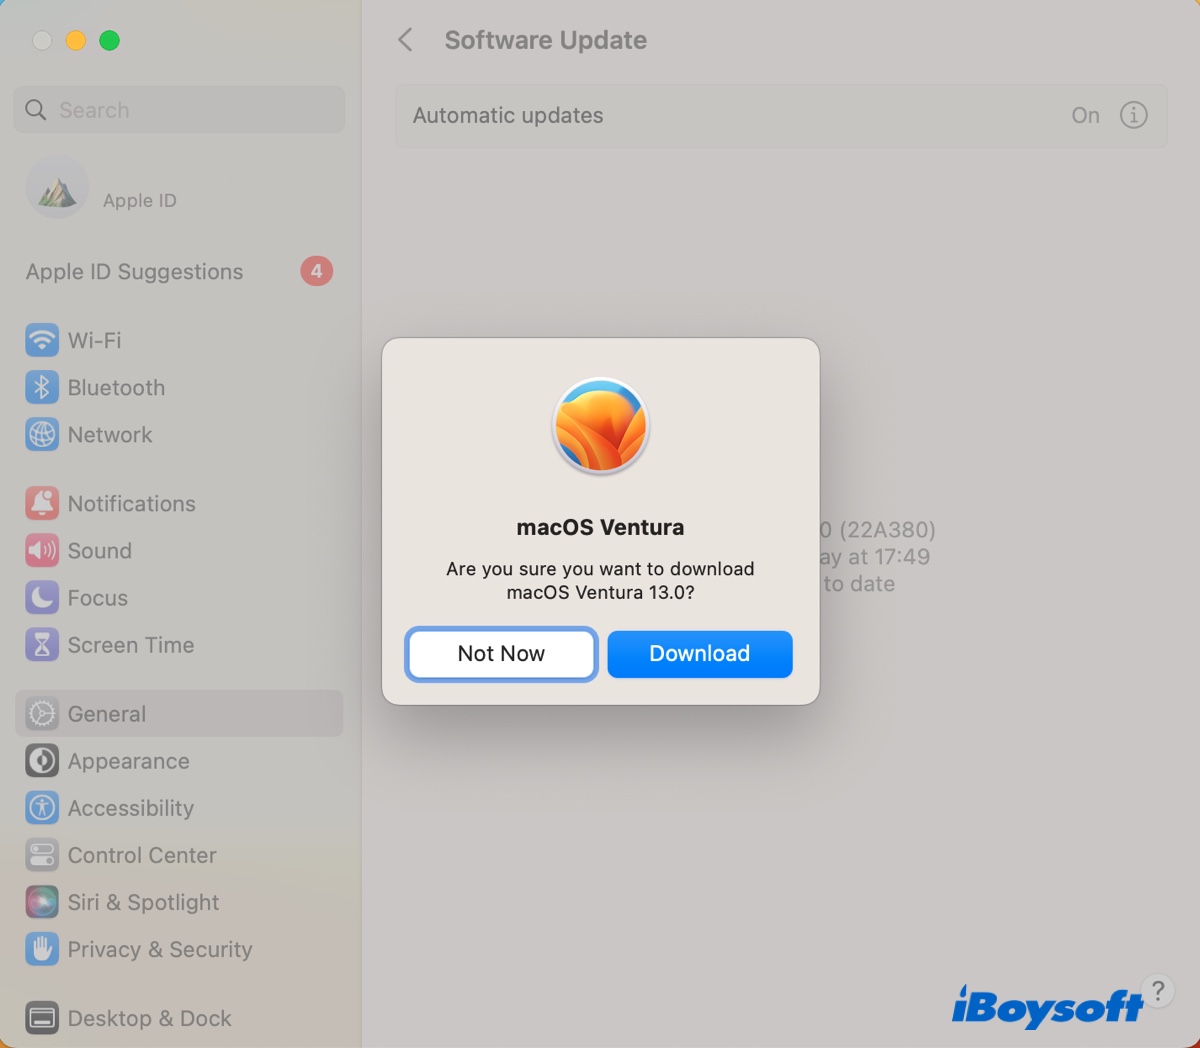 Click Download to download macOS Ventura full installer